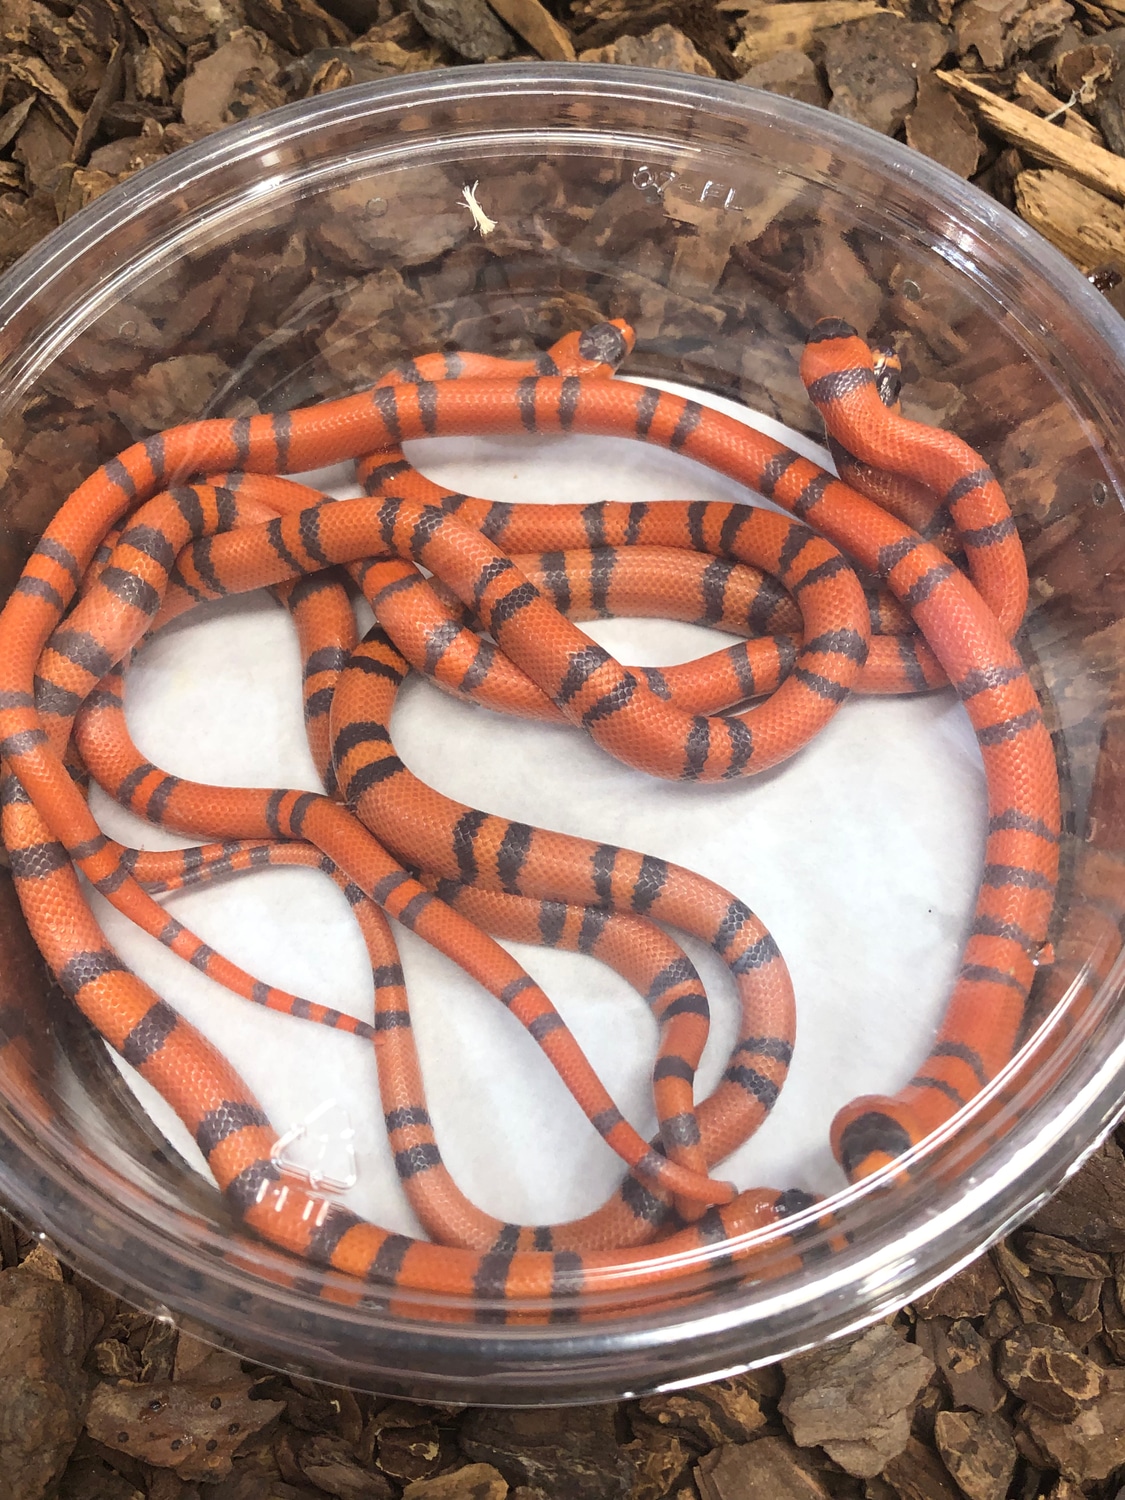 Hypo 6.4 Group Honduran Milk Snake by Rustys-balls